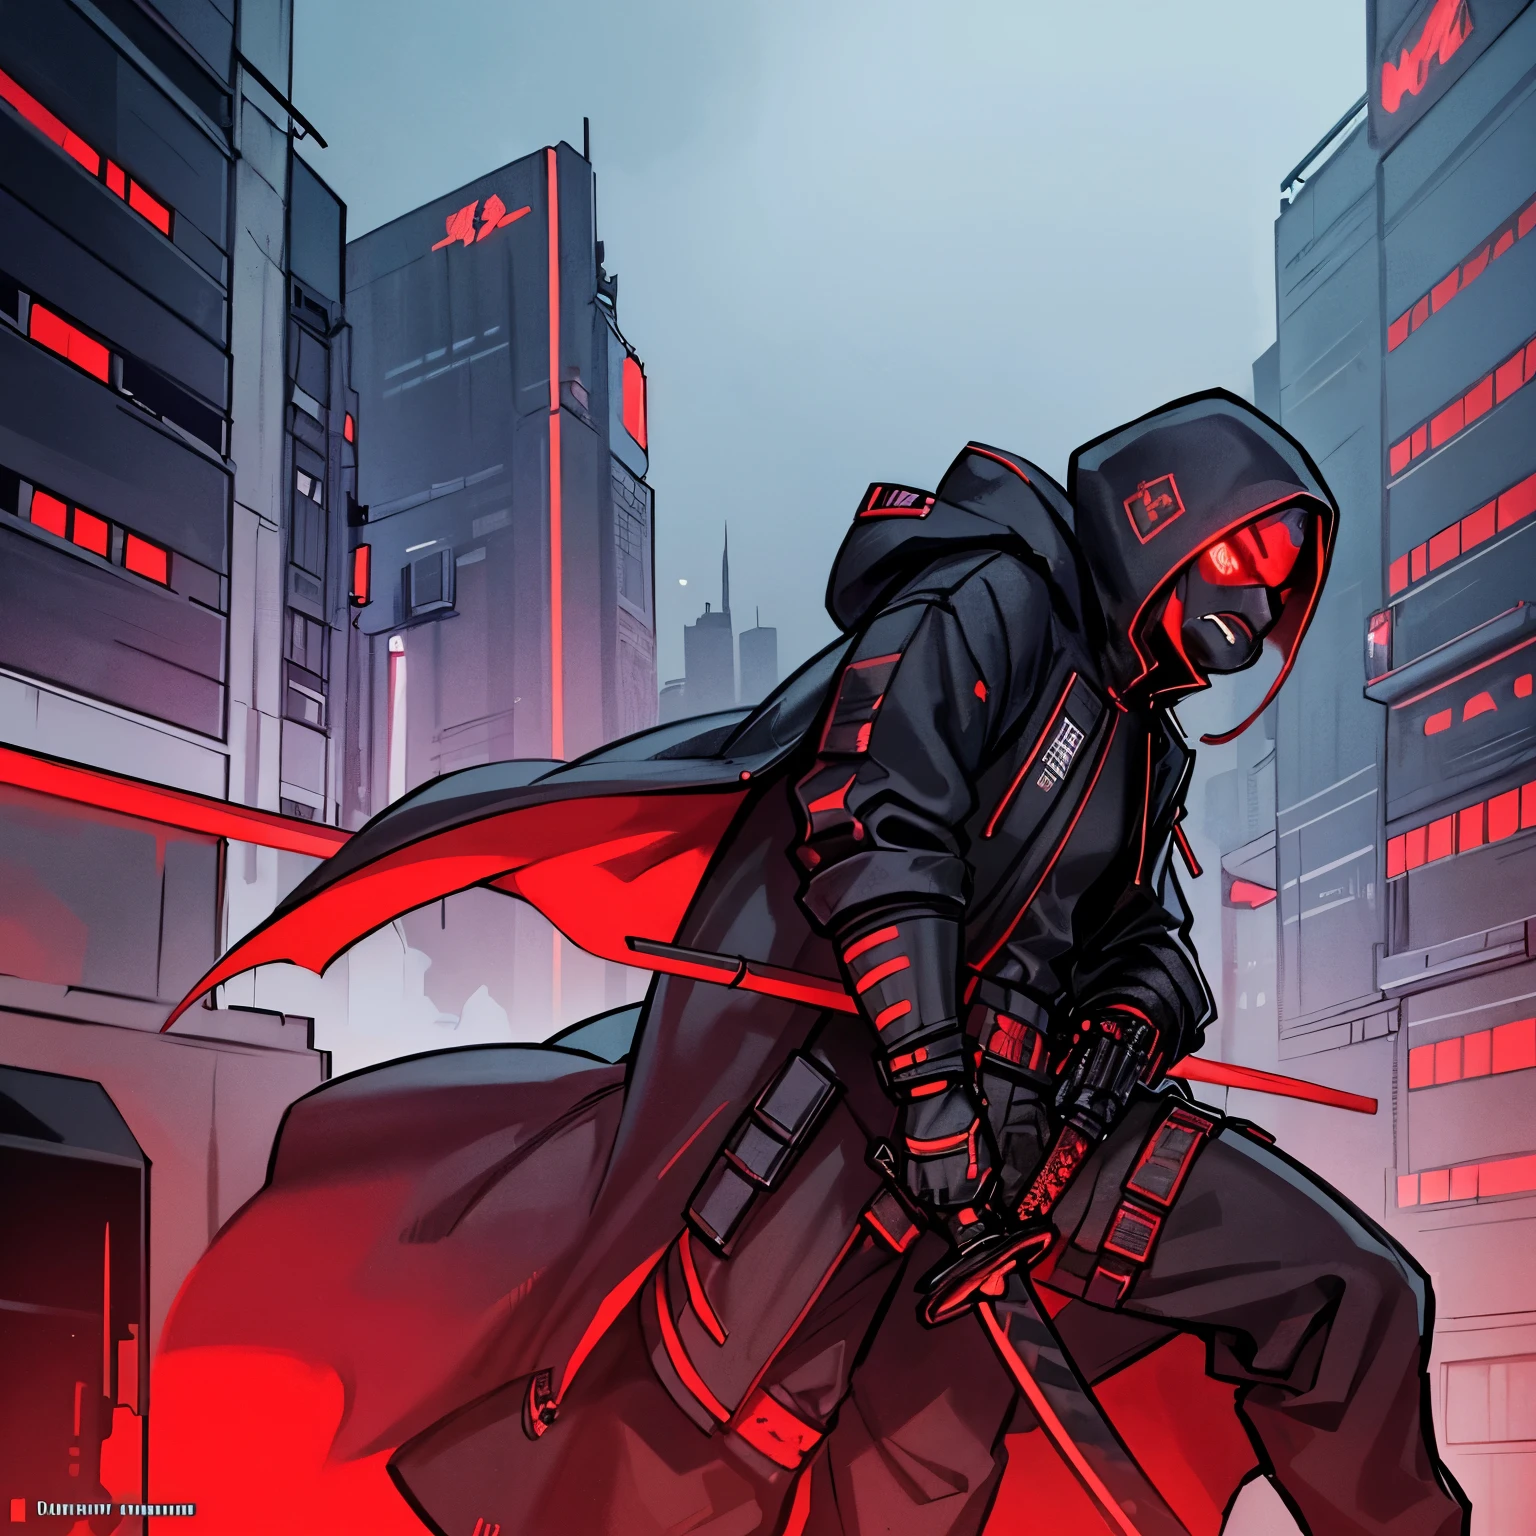 a man in a hooded jacket holding a sword standing on top of a building, cyberpunk assassin, the red ninja, cyberpunk samurai, cyberpunk dark fantasy art, ominous assassin, very beautiful cyberpunk samurai, cyberpunk hero, cyborg ninja, mystic ninja, red glowing eyes, with red glowing eyes, dark cyberpunk, dark cyberpunk illustration, urban samurai, portrait of ninja slayer